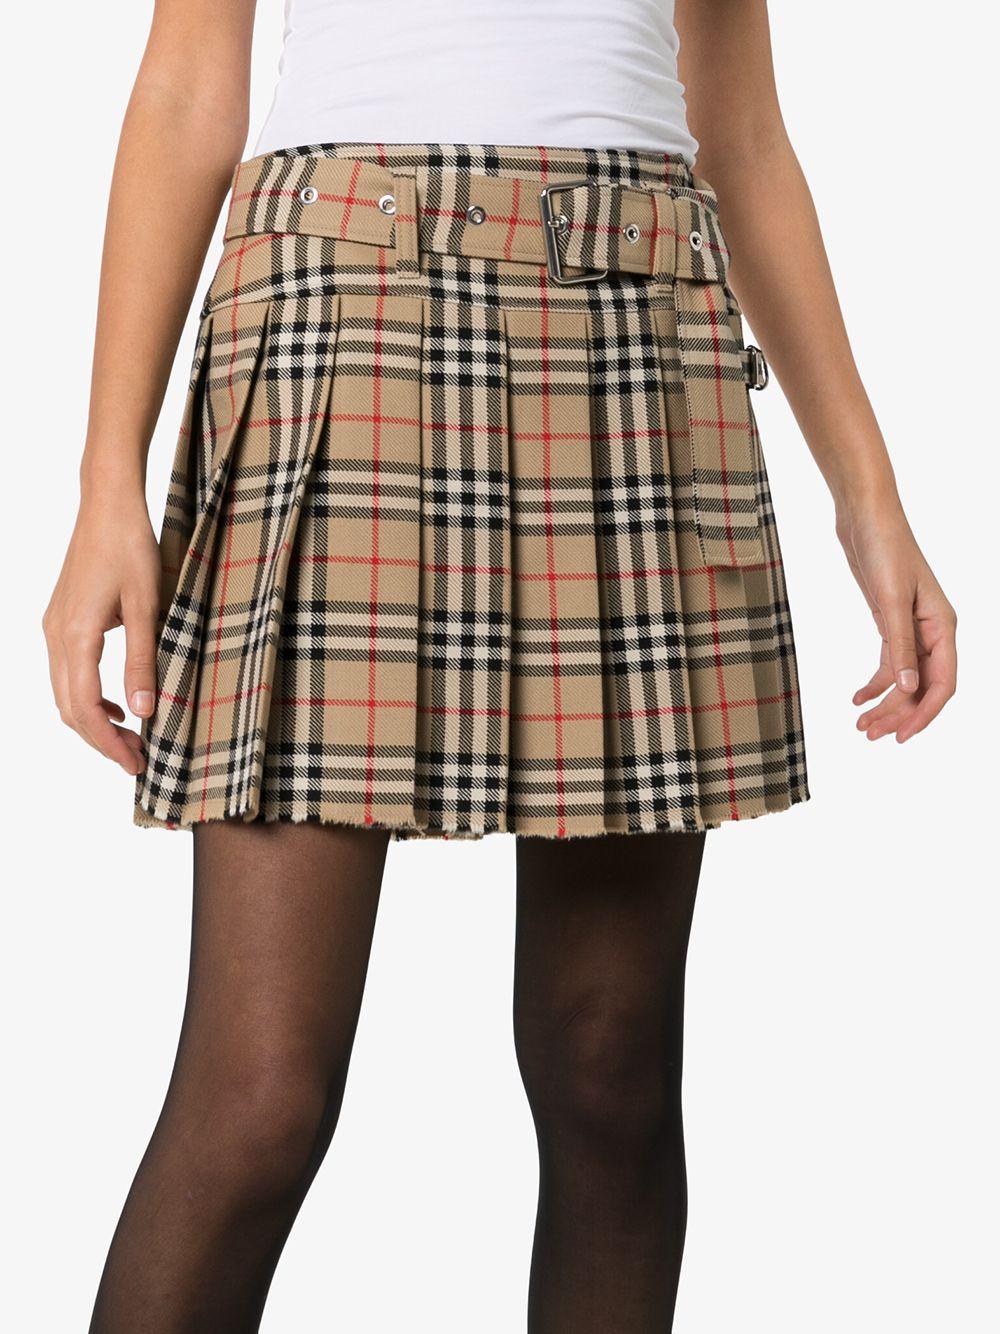 burberry skirt mini